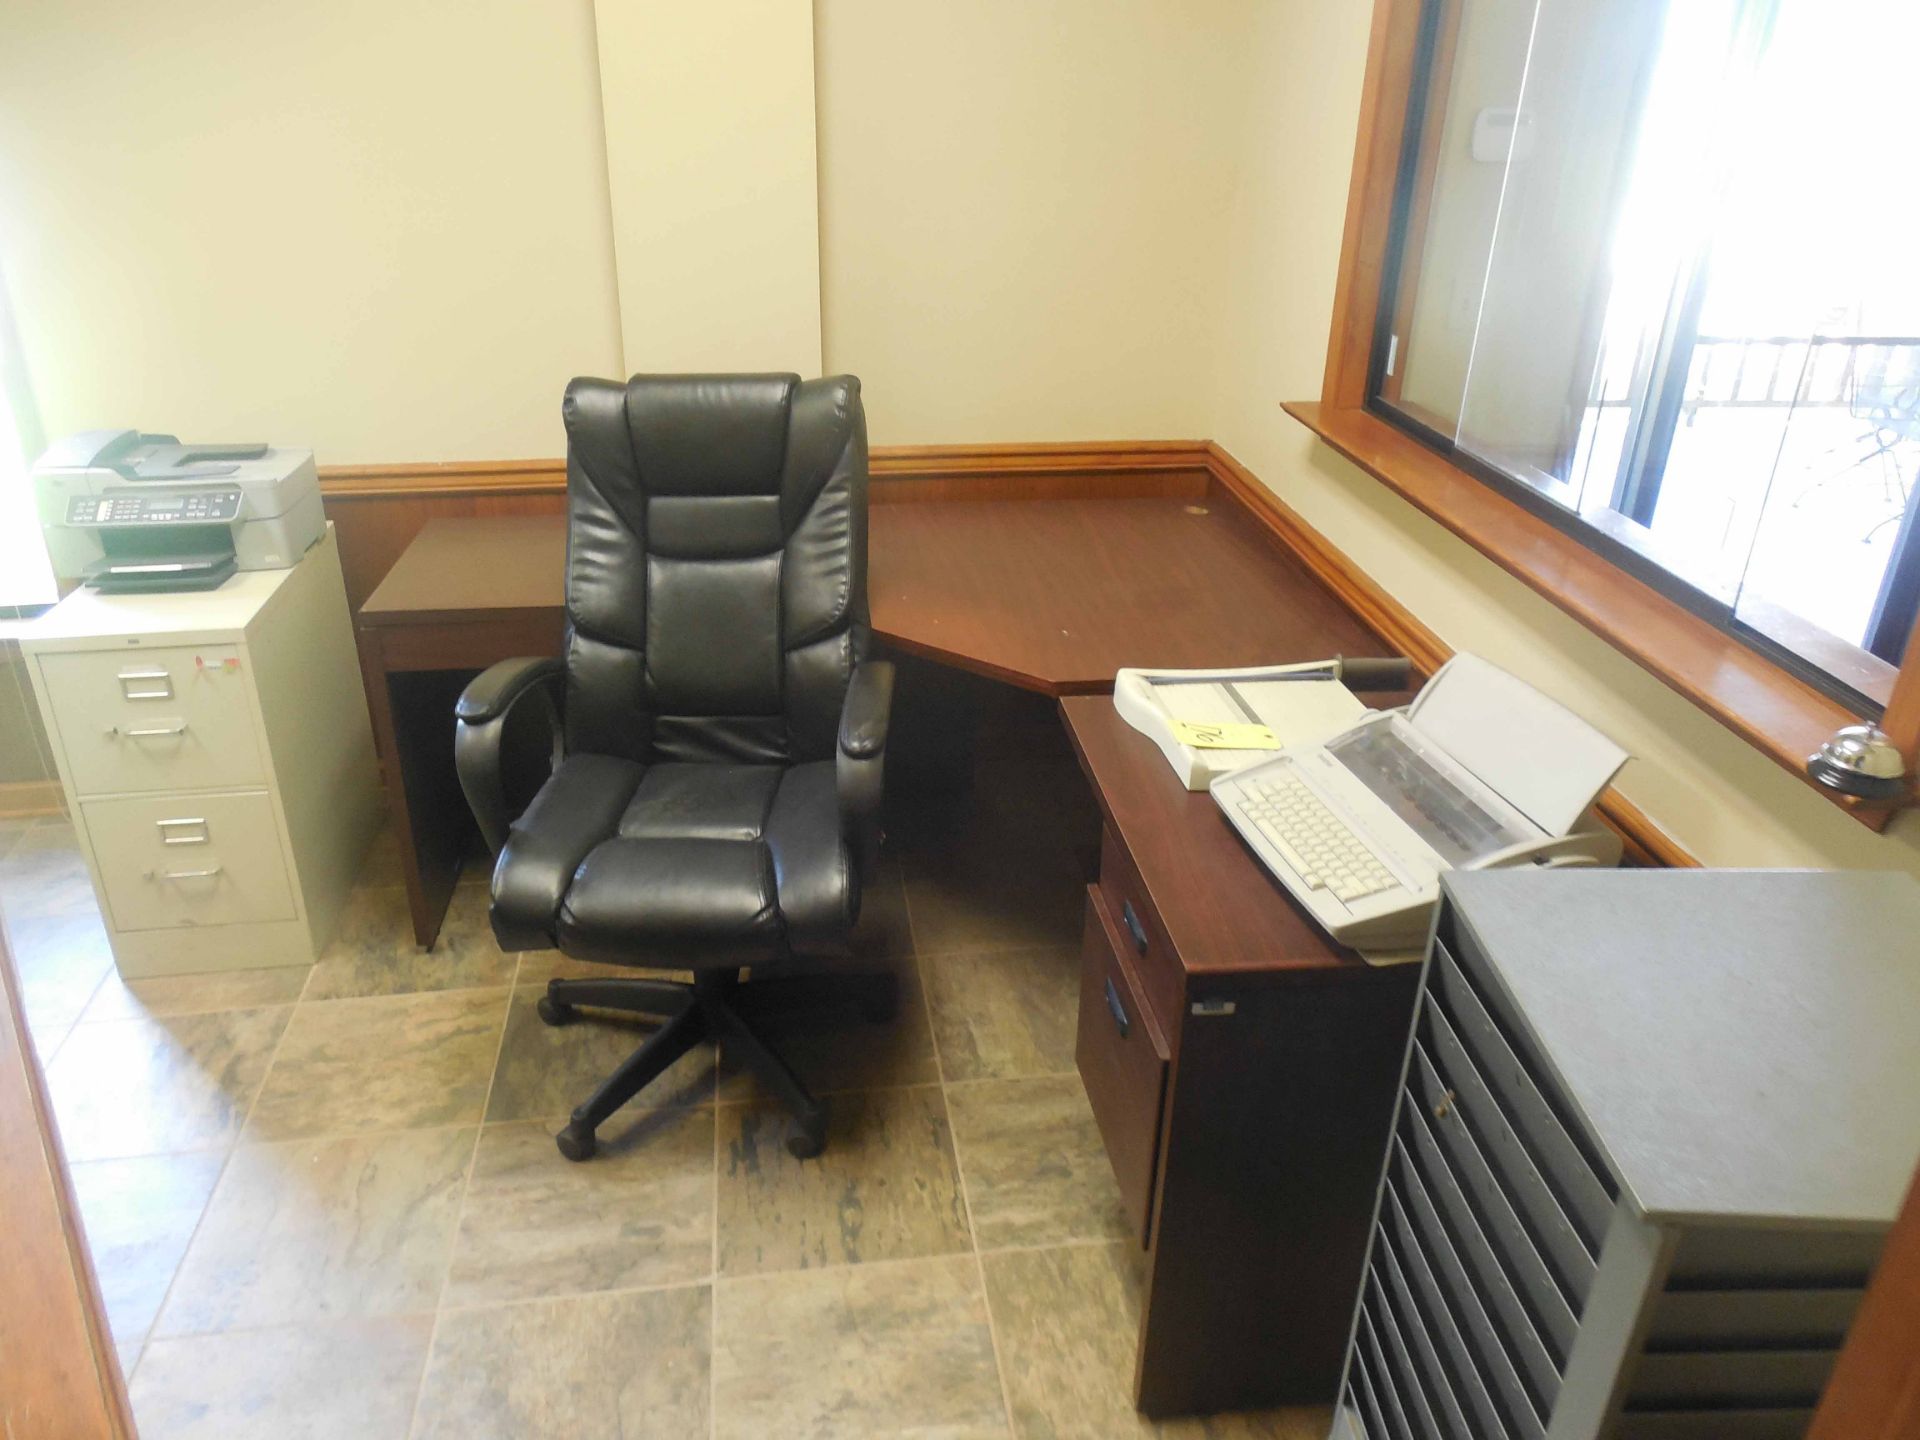 LOT CONTENTS OF OFFICE: desk, typewriter, printer